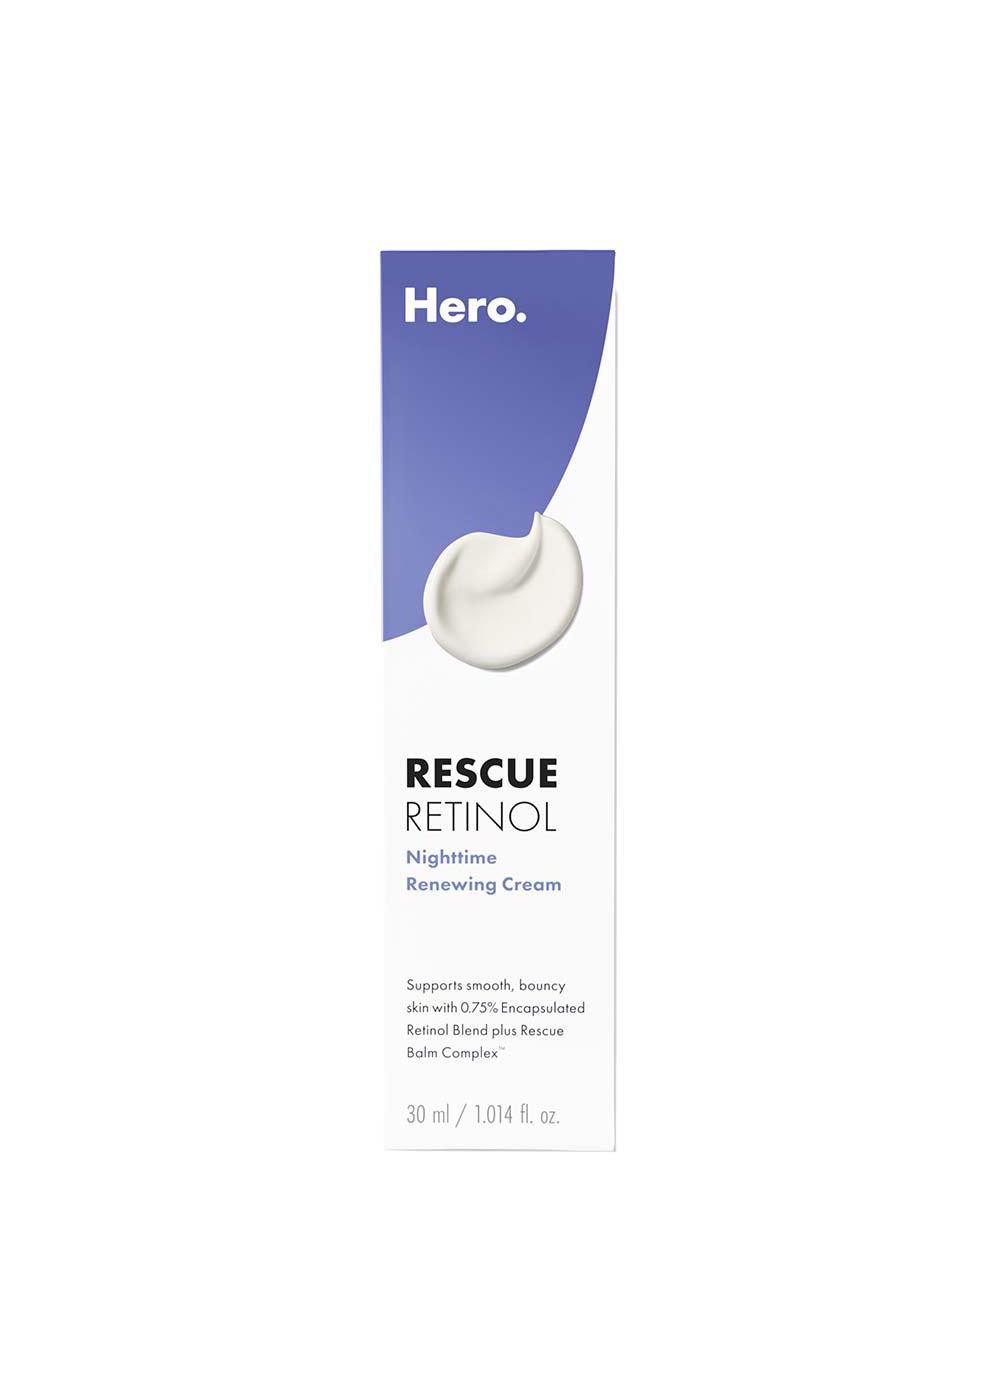 Hero Rescue Retinol Nighttime Renewing Cream; image 1 of 2